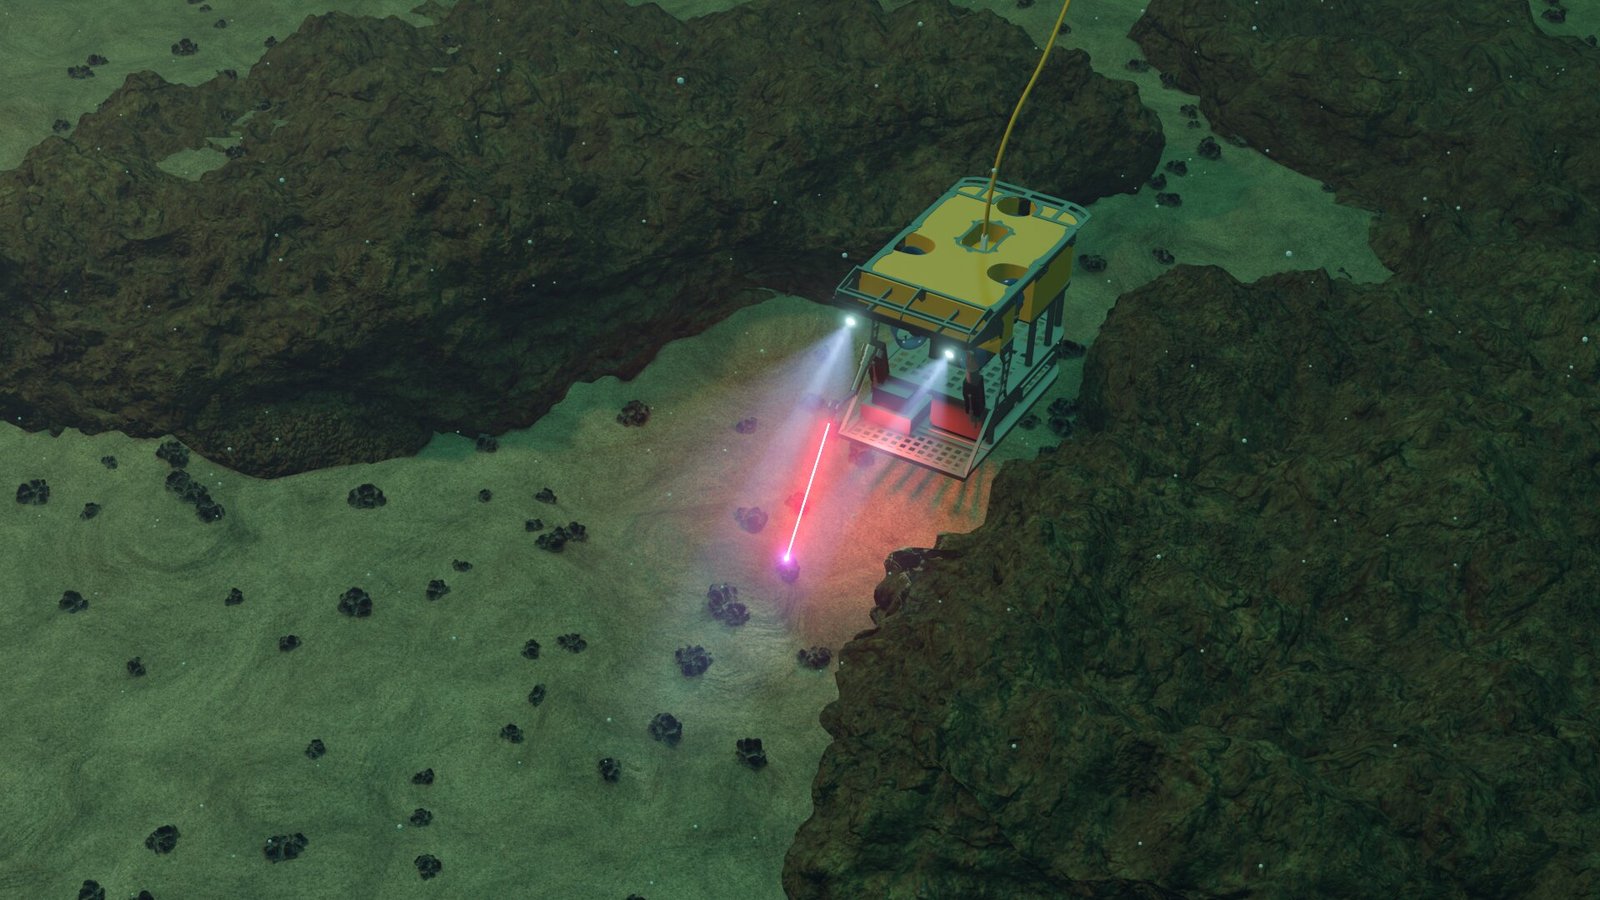 Double-pulse LIBS technology provides environmentally friendly analysis of deep-sea materials